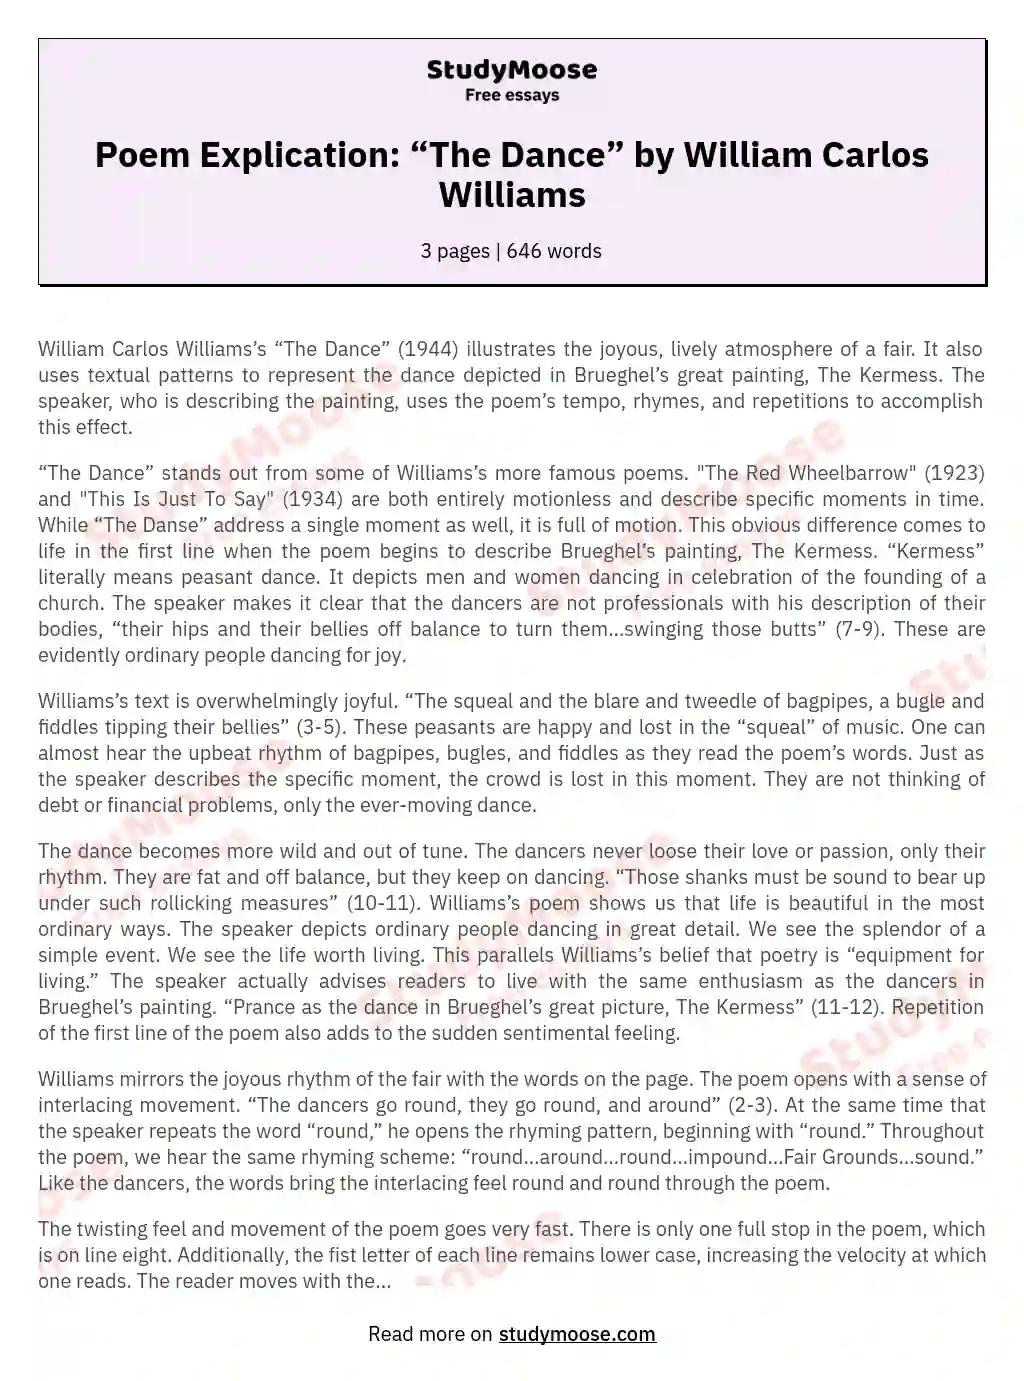 Poem Explication: “The Dance” by William Carlos Williams essay